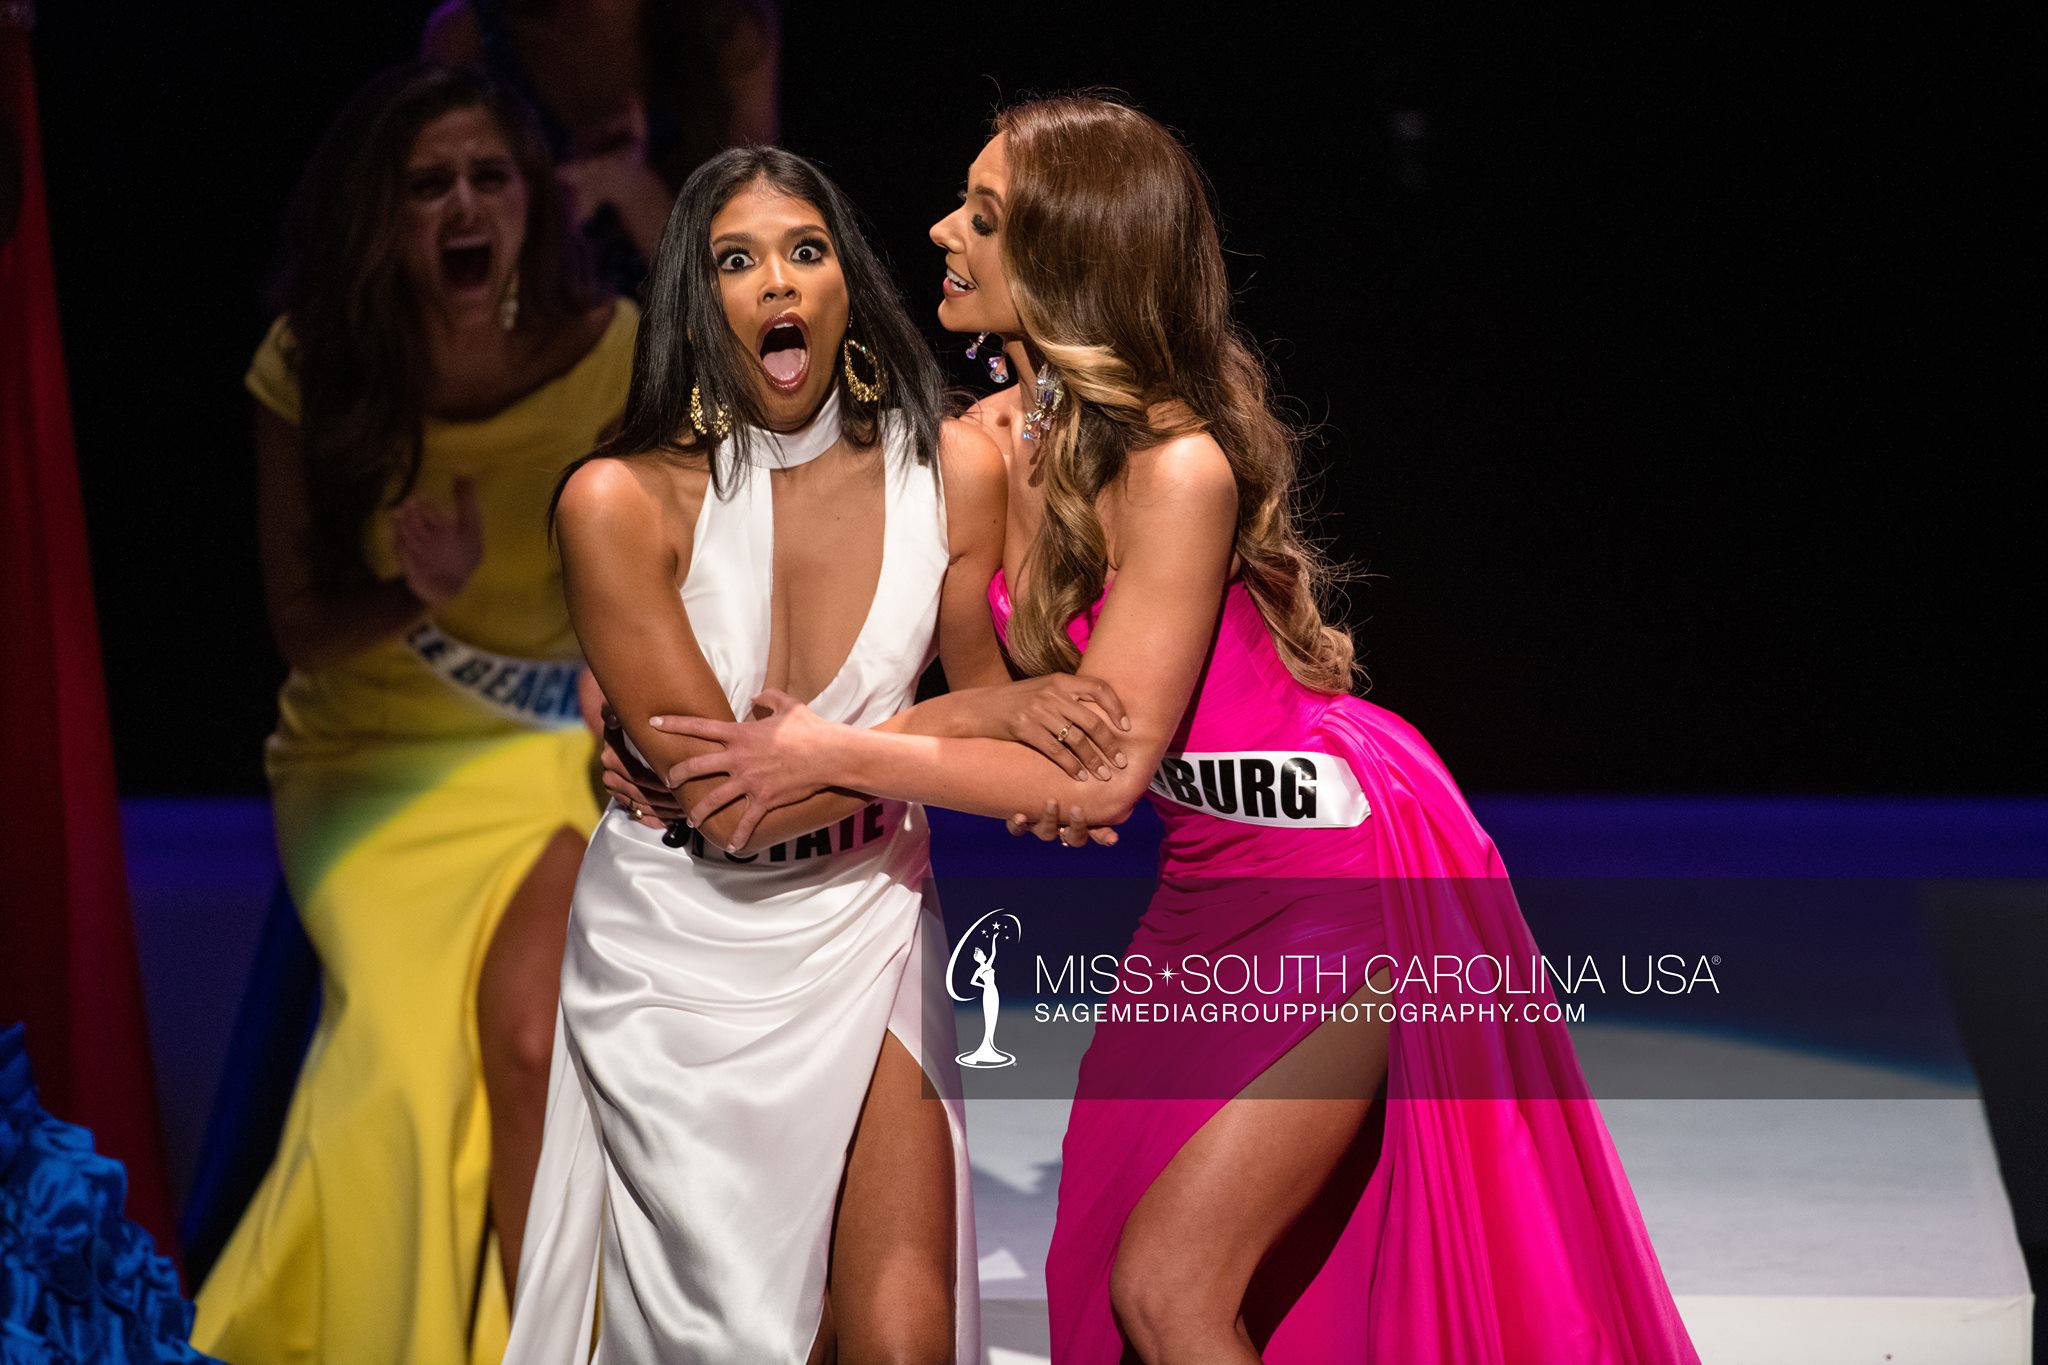 Miss South Carolina USA 2019 pageant photos 12